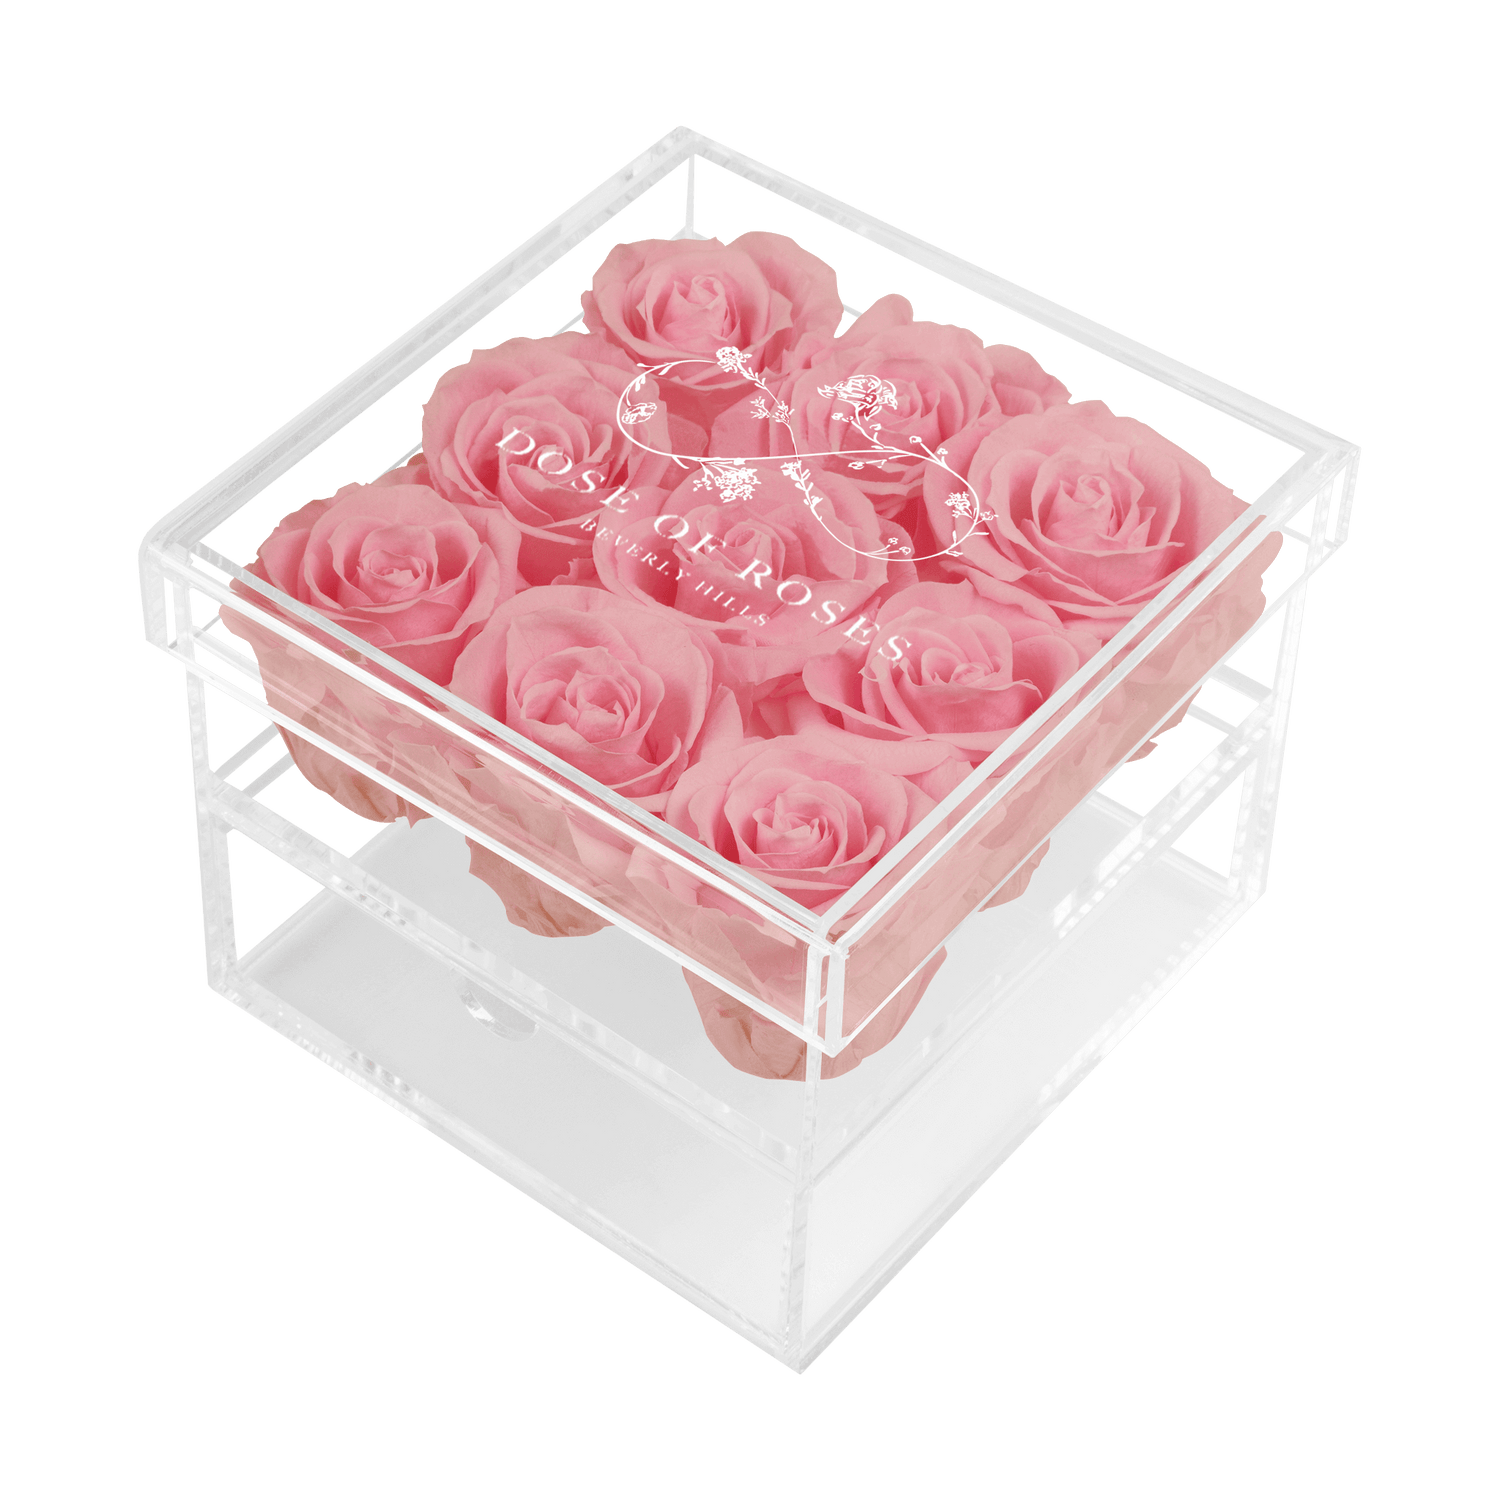 Preserved Peach Roses Medium Square Acrylic Box